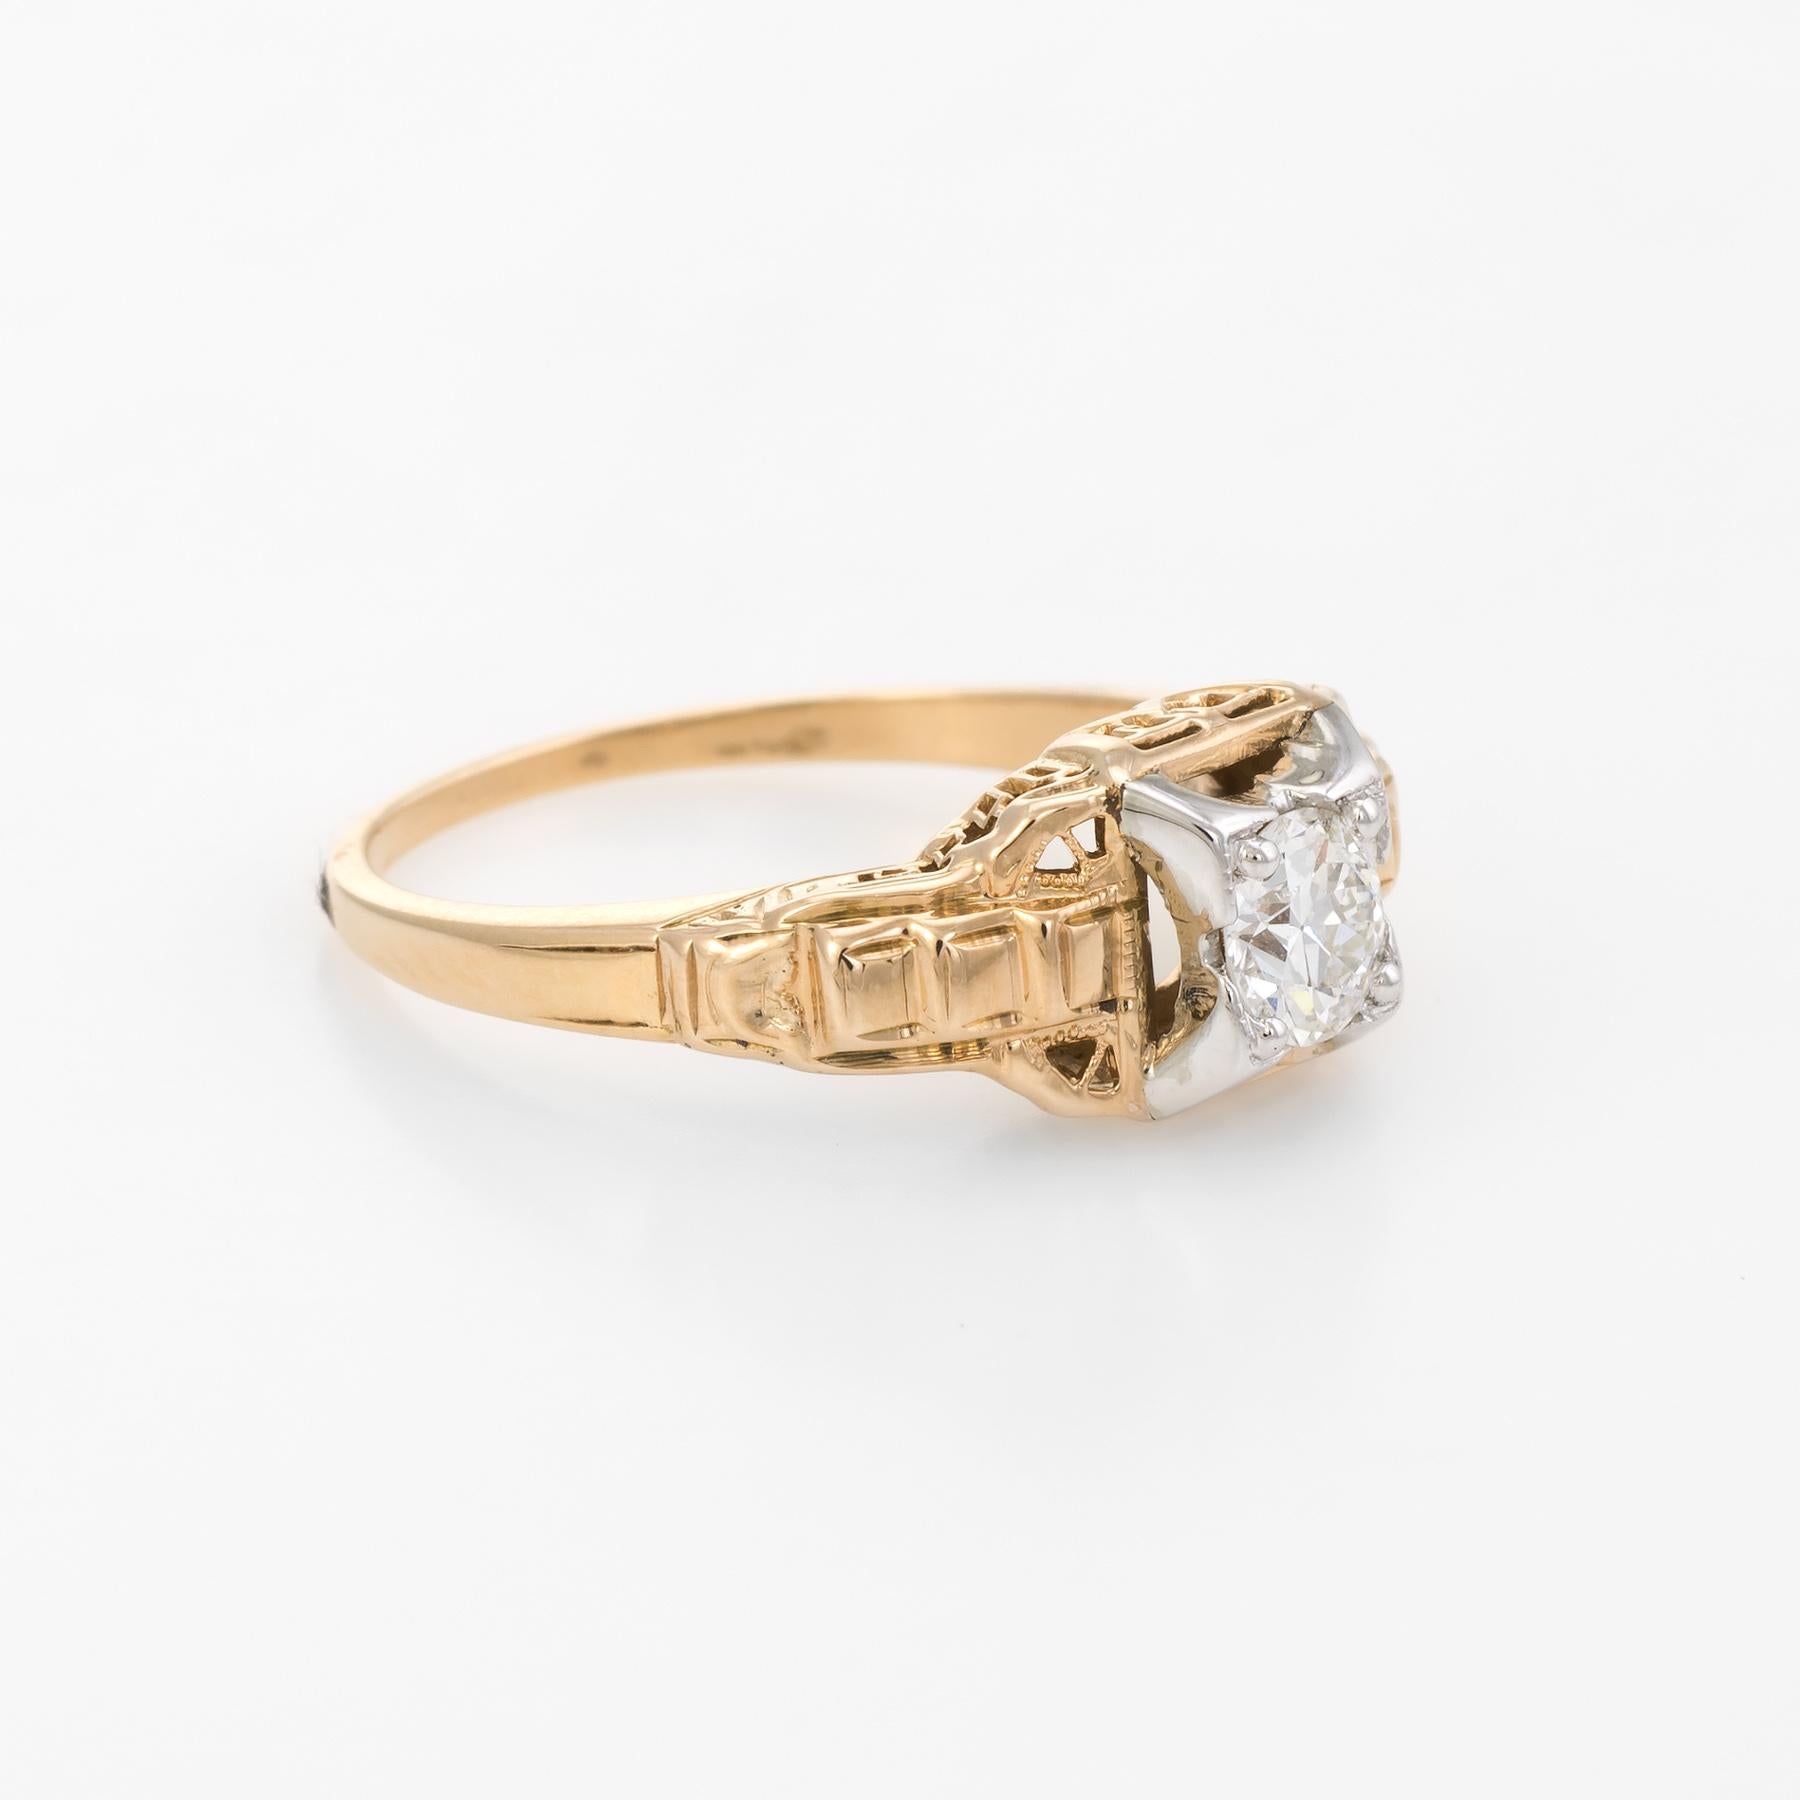 Old European Cut Antique Art Deco Diamond Ring Vintage 14 Karat Two-Tone Gold Fine Jewelry